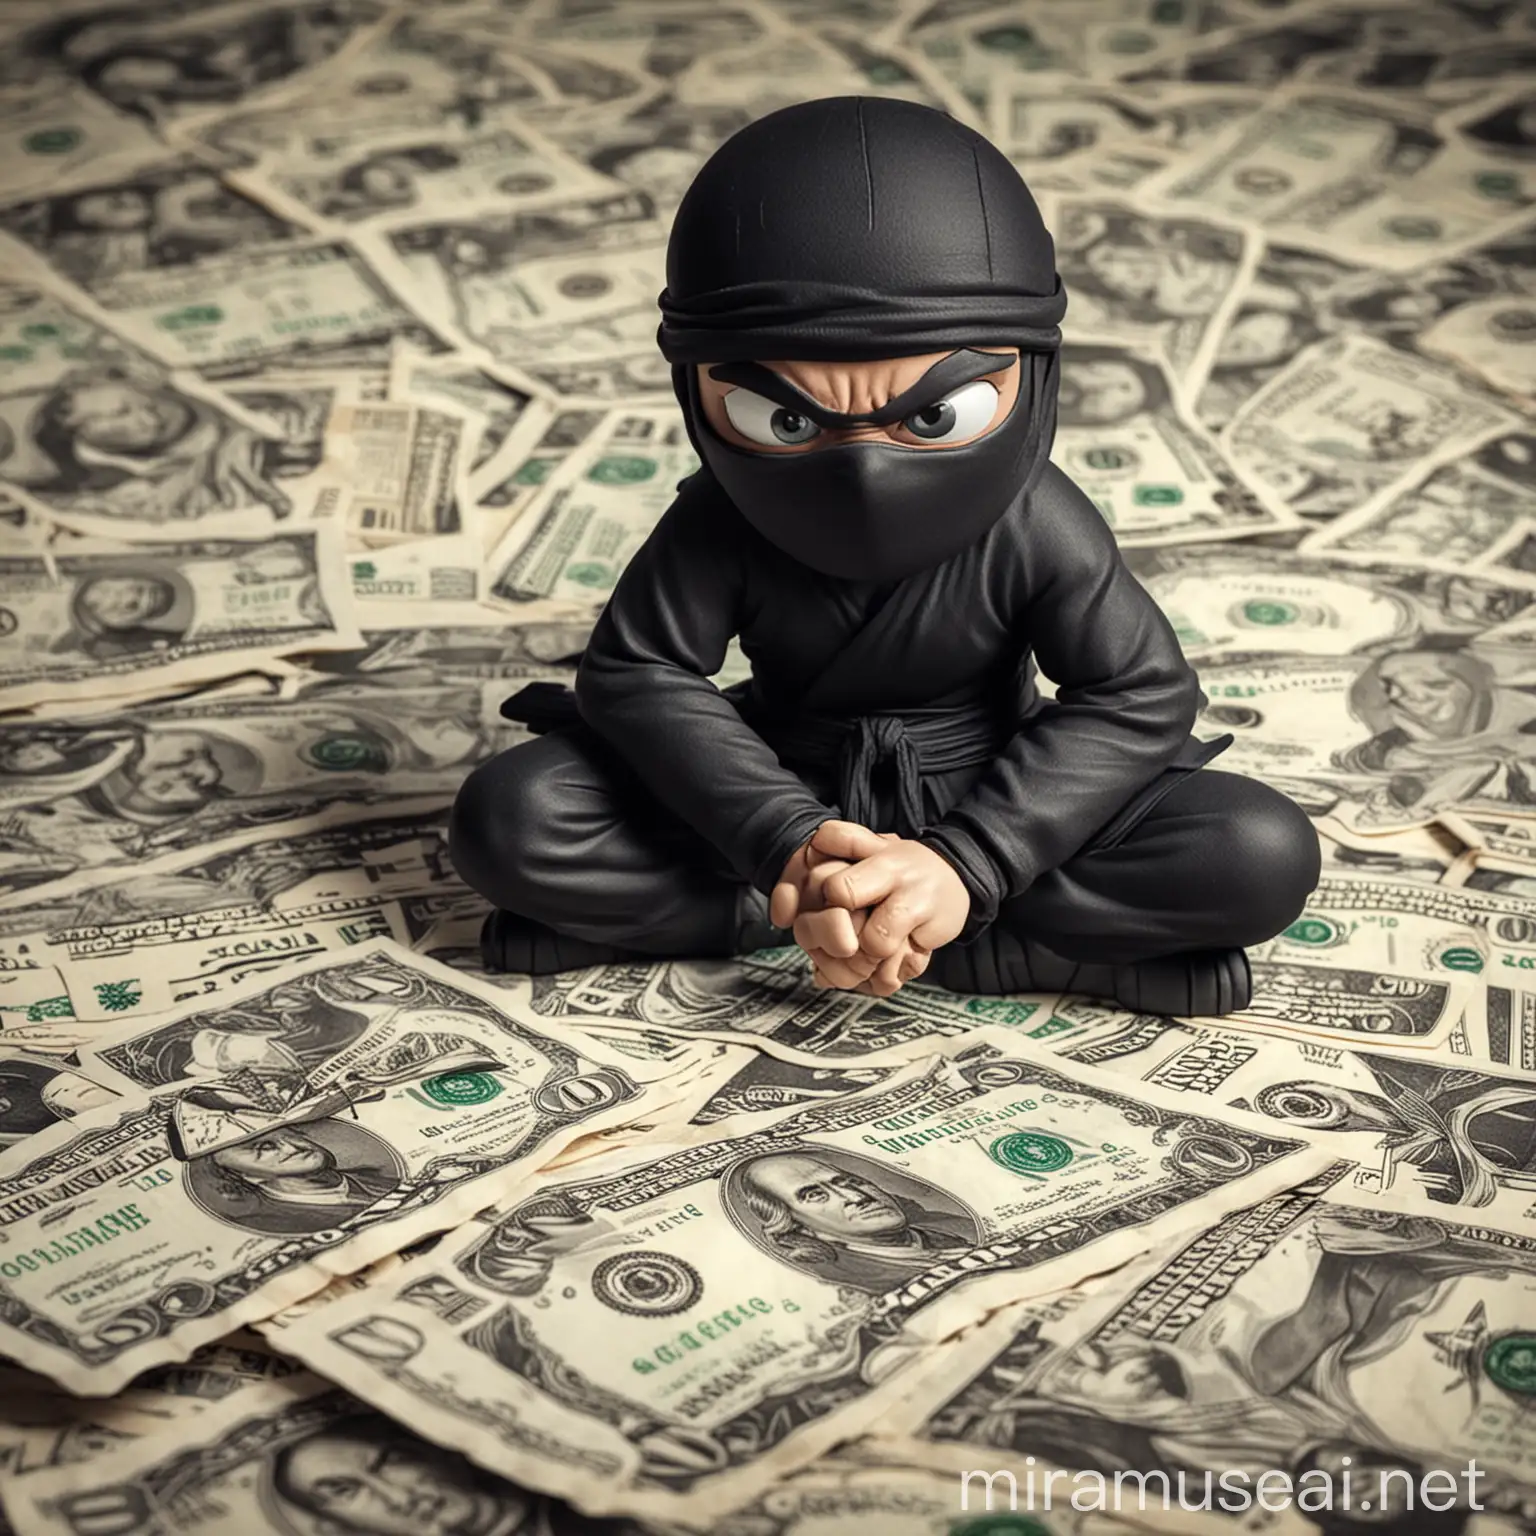 Cartoon Ninja Sitting on Pile of Dollar Bills